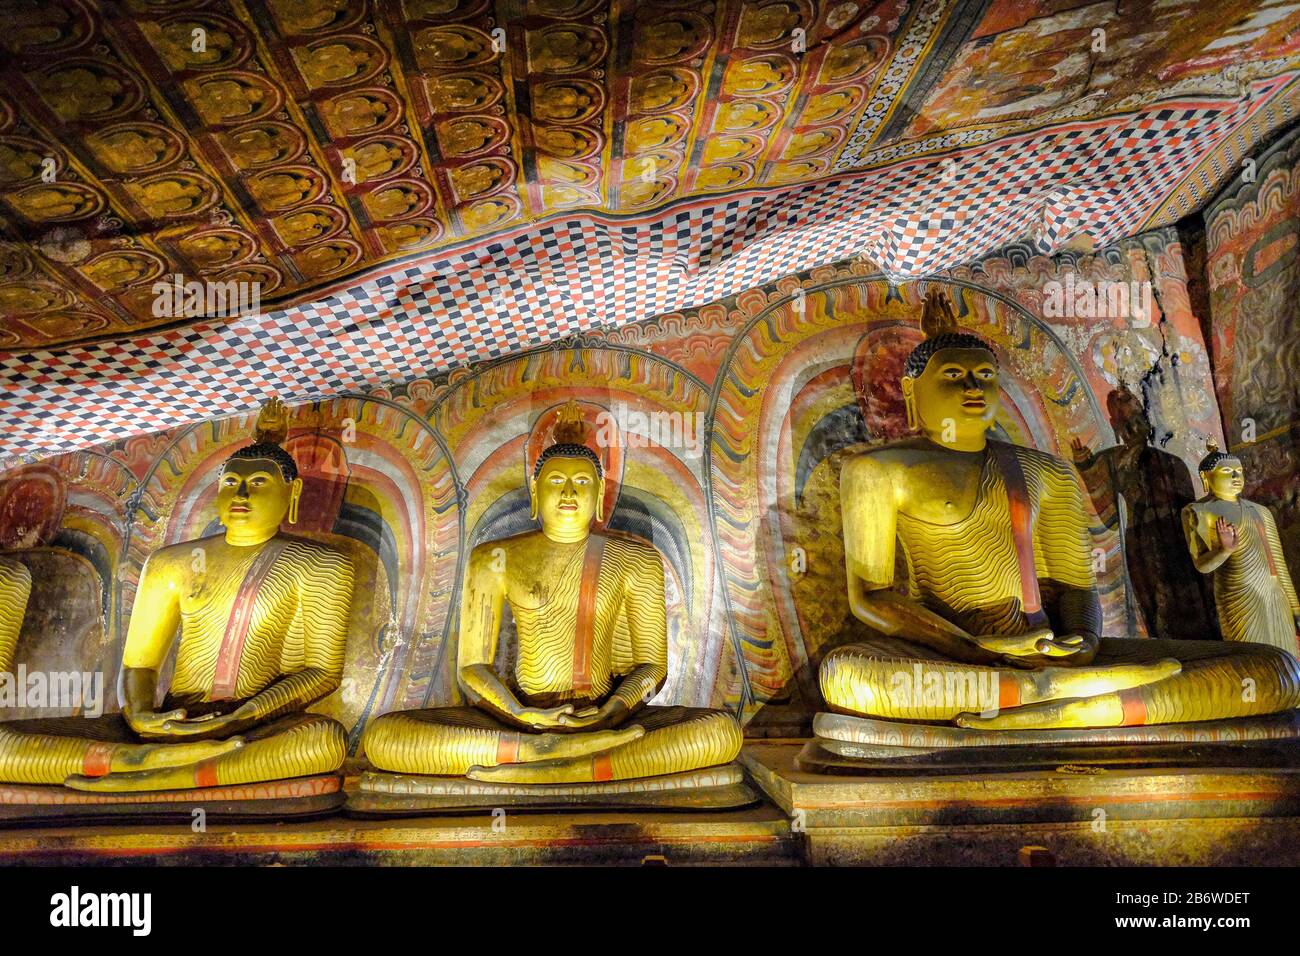 Dambulla, Sri Lanka - February 2020: Buddha statue inside Dambulla cave temple on February 8, 2020 in Dambulla, Sri Lanka. Stock Photo